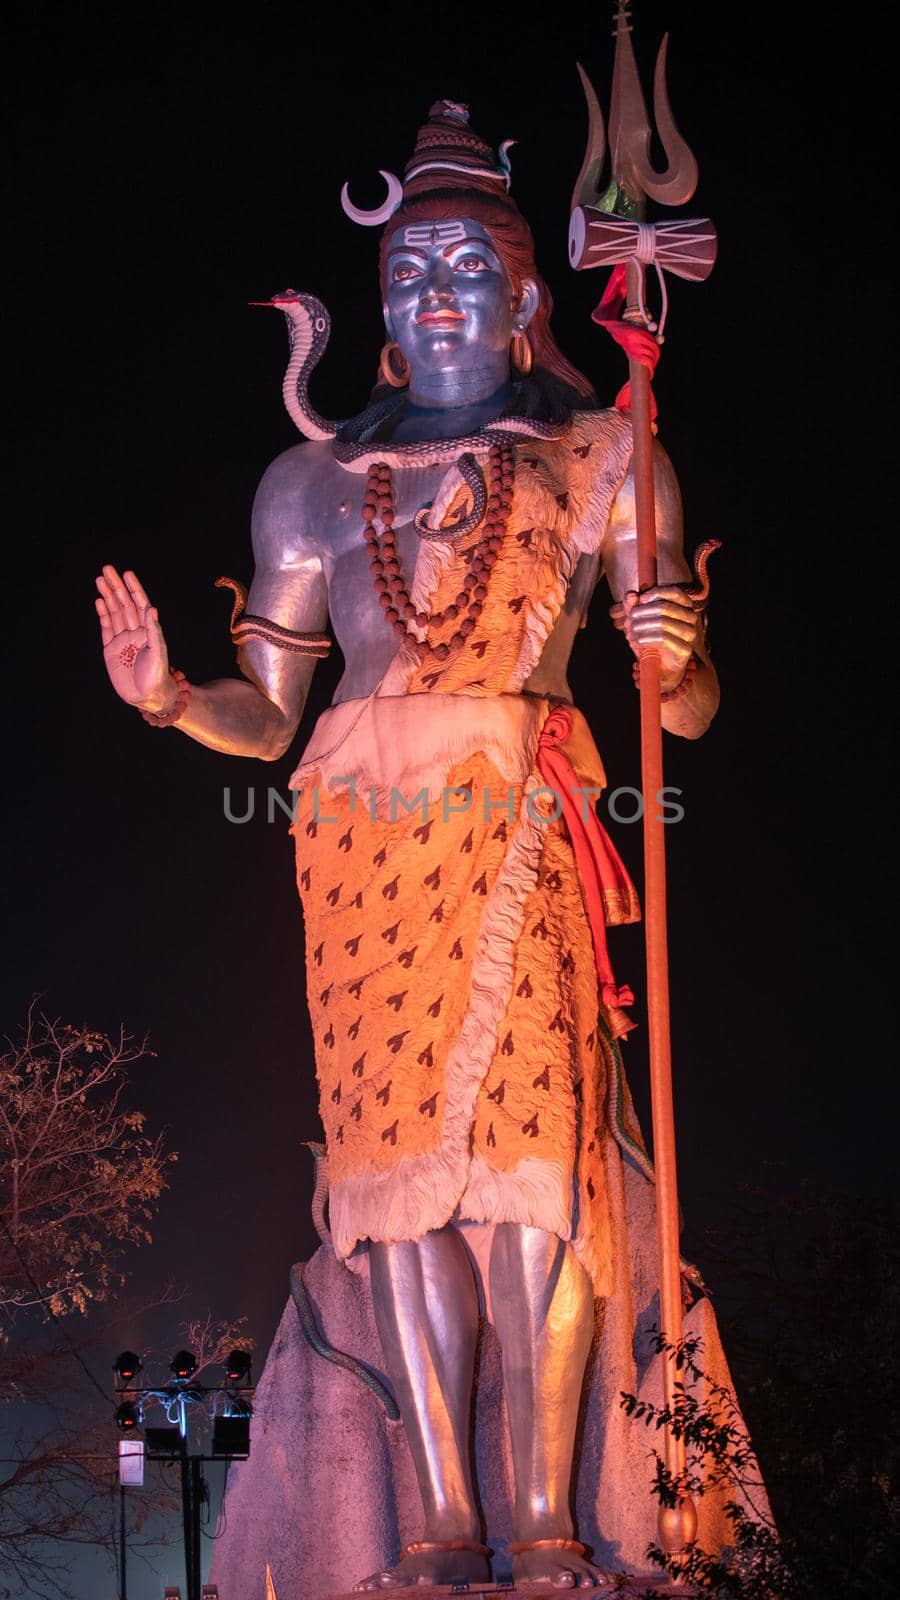 Statue of Indian God Shiva at Haridwar, Uttarakhand India, , Appleprores 422, 4k by stocksvids